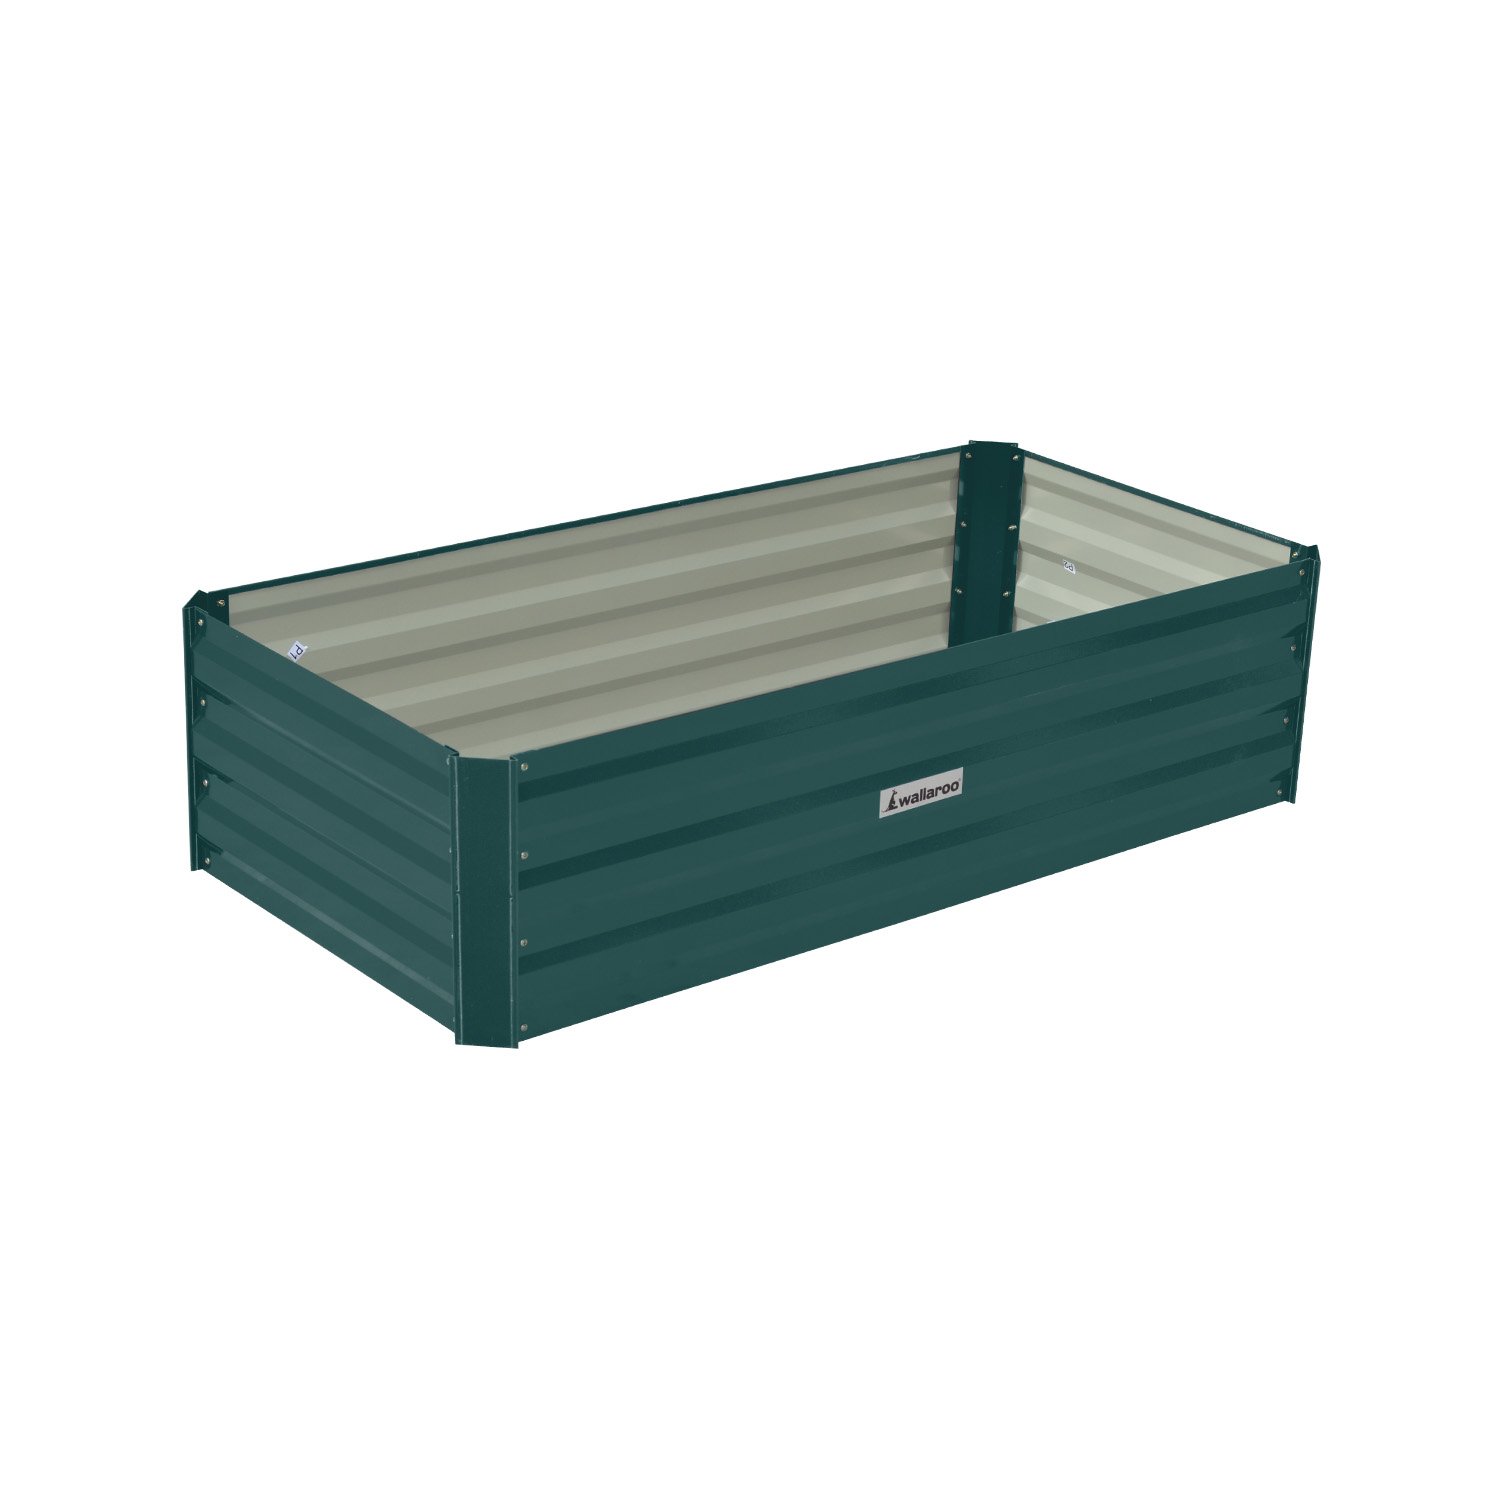 Wallaroo Garden Bed 120 x 60 x 30cm Galvanized Steel - Green 2